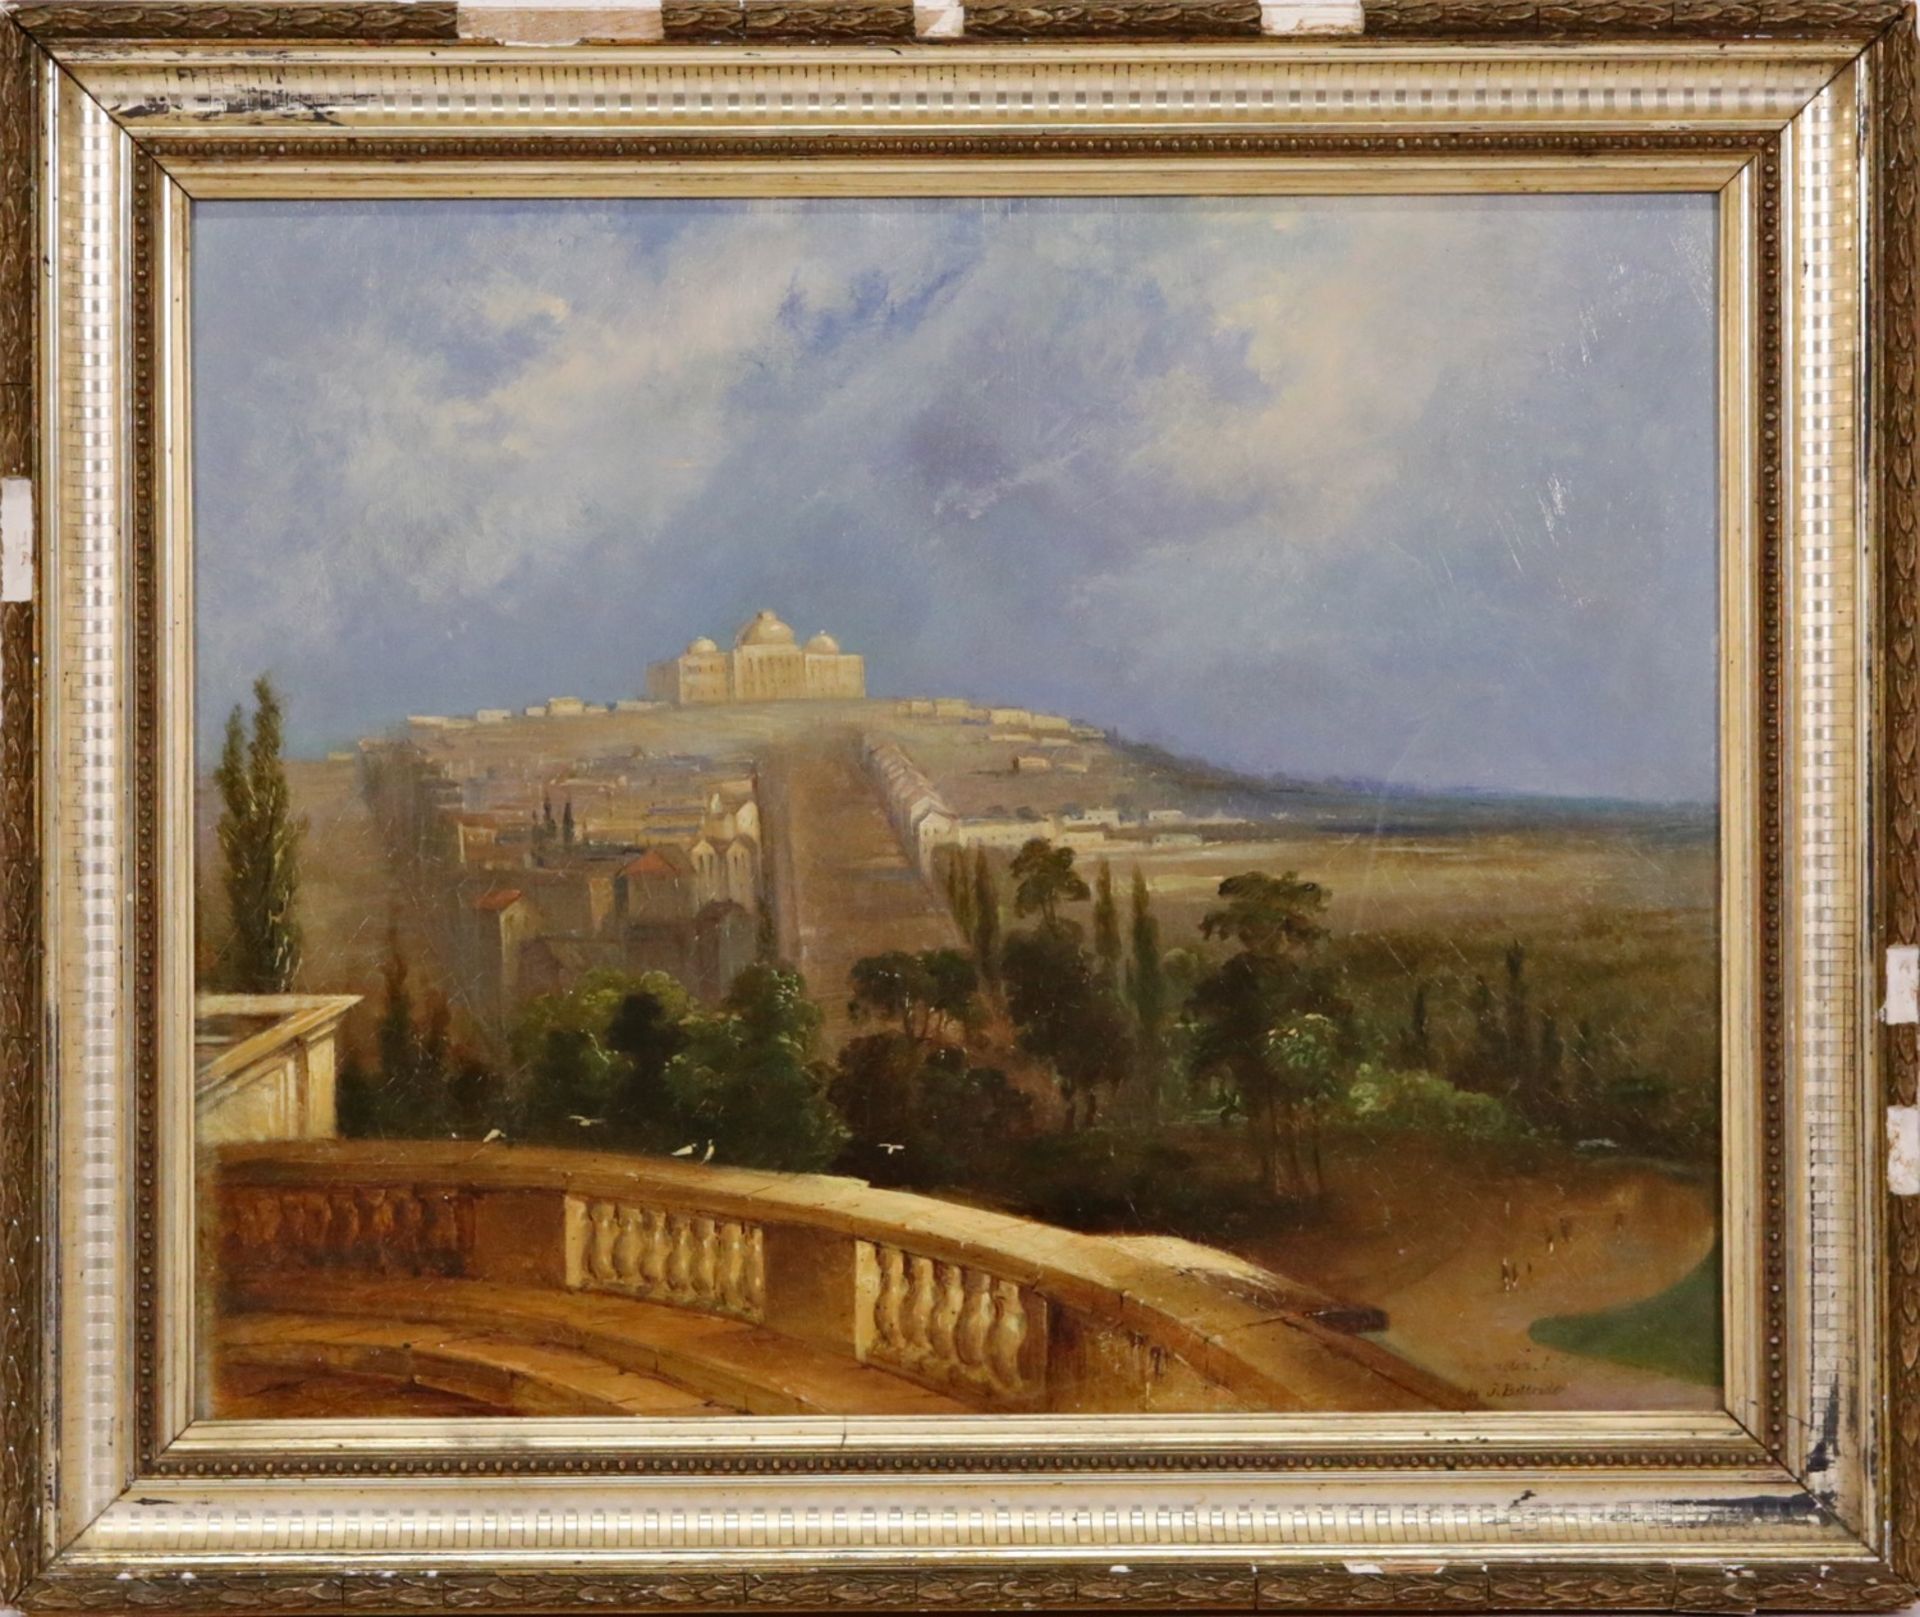 J.BETTRIDGE (XVIII - XIX) "MARSEILLES" and "WASHINGTON", a pair of paintings, oil on canvas, 19 _. - Image 2 of 9